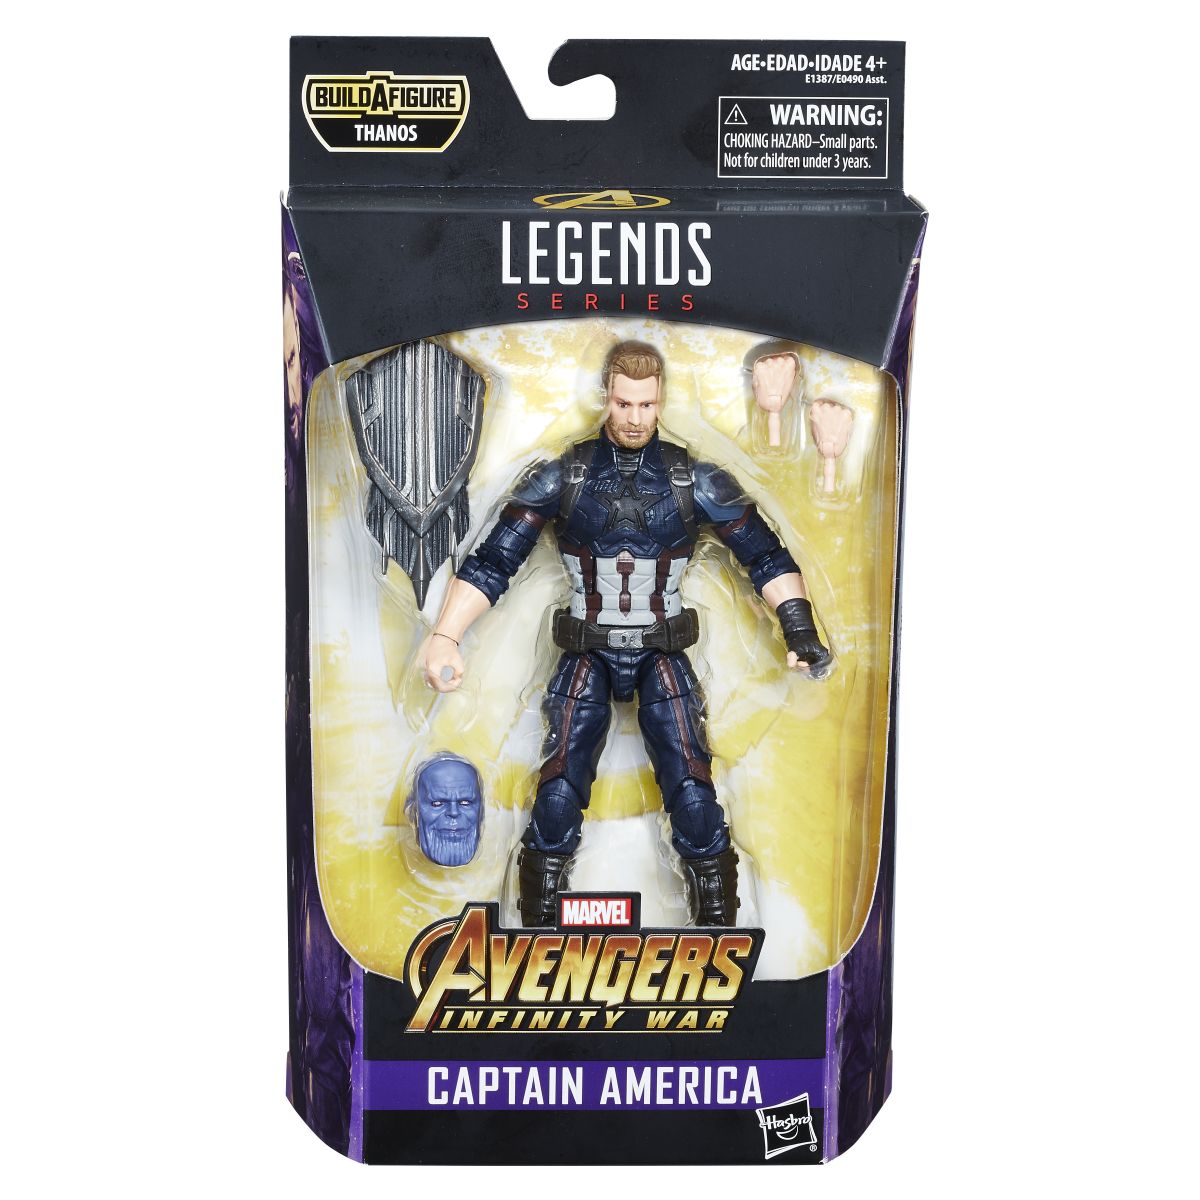 Marvel Avengers Infinity War Legends Series 6 Inch Figure Assortment Captain America In Pkg